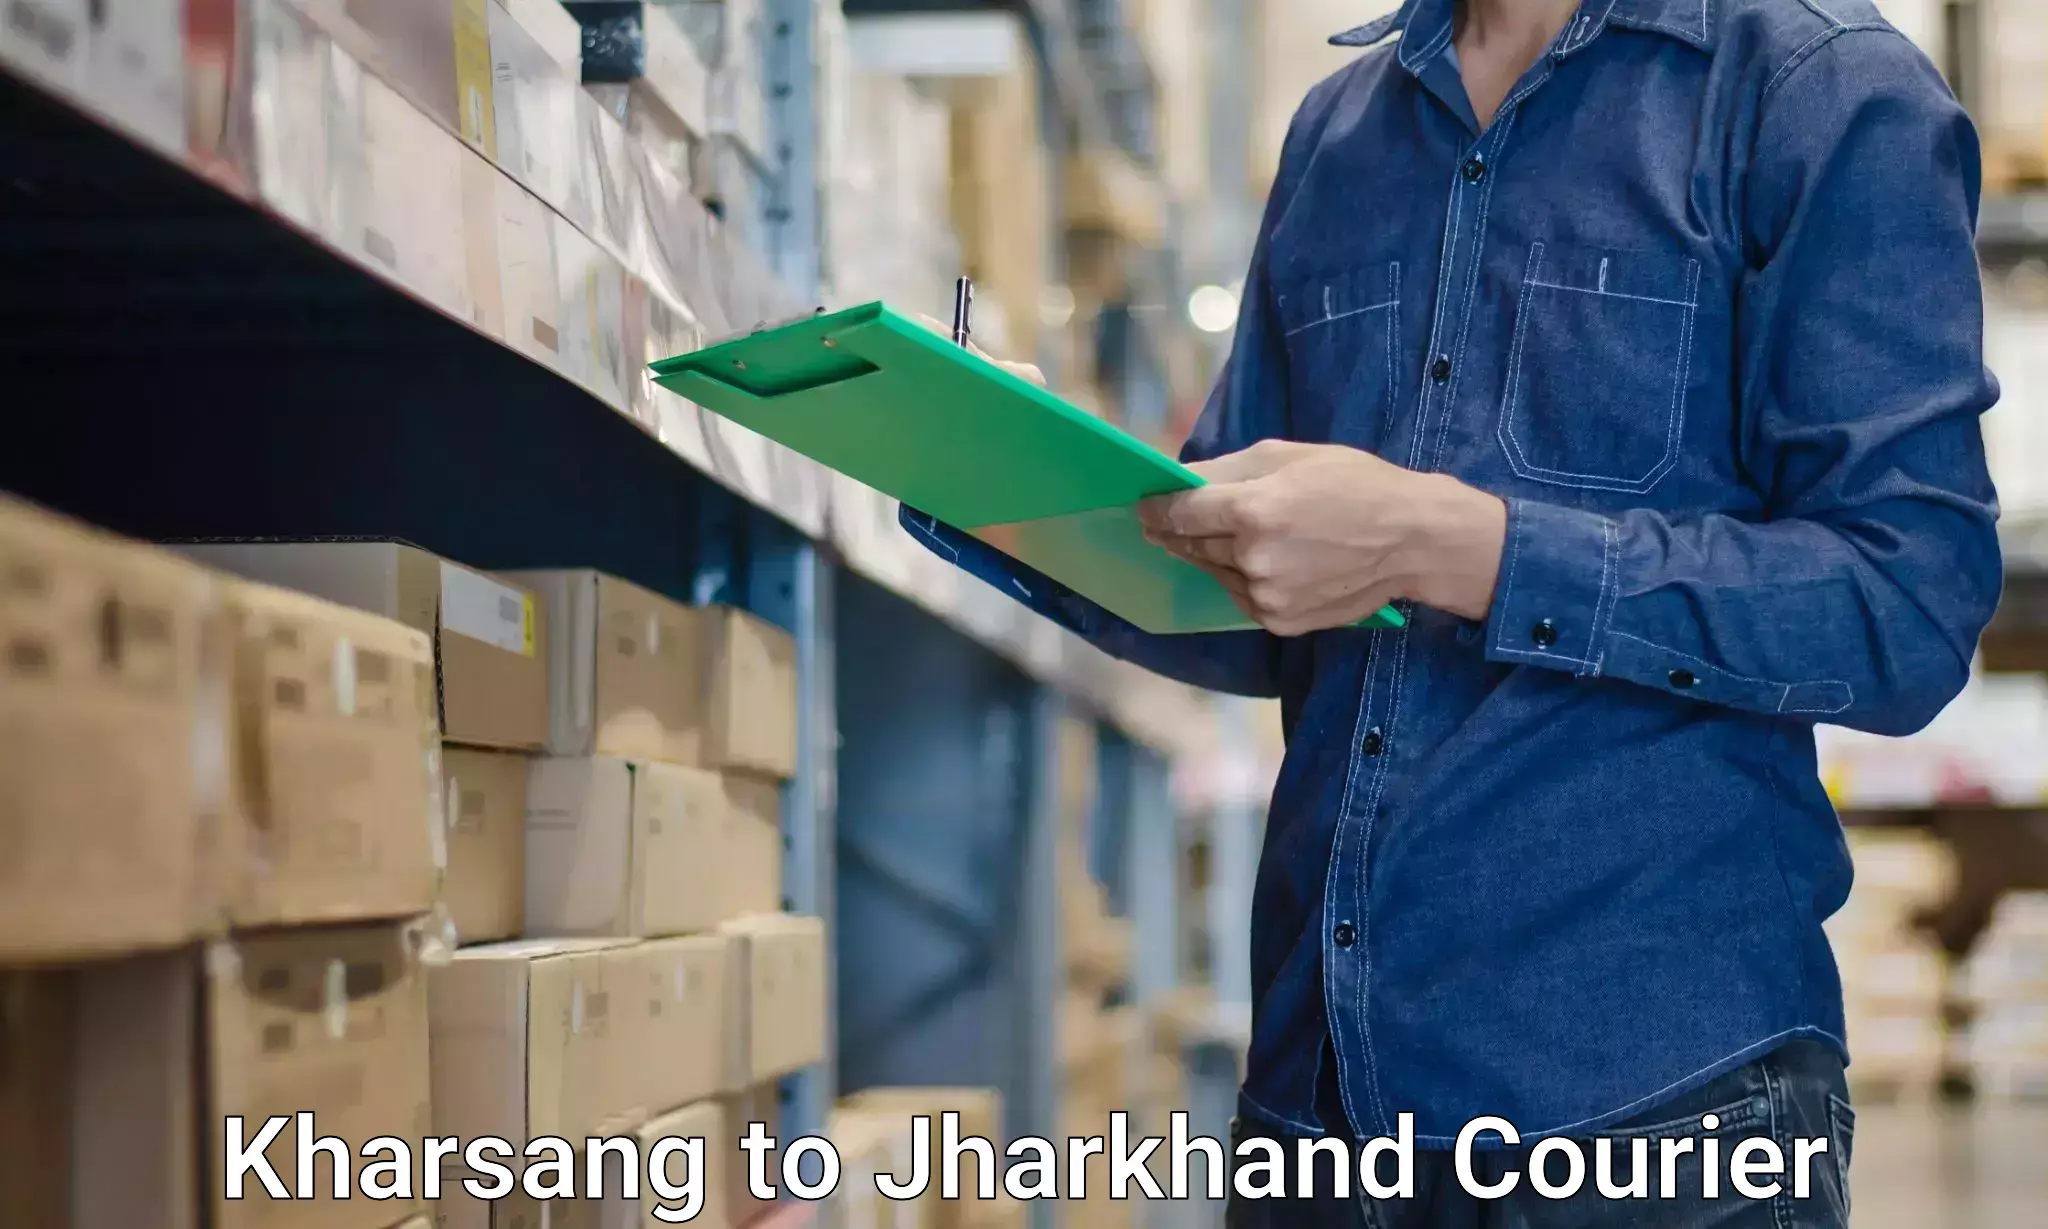 Professional moving company Kharsang to IIIT Ranchi